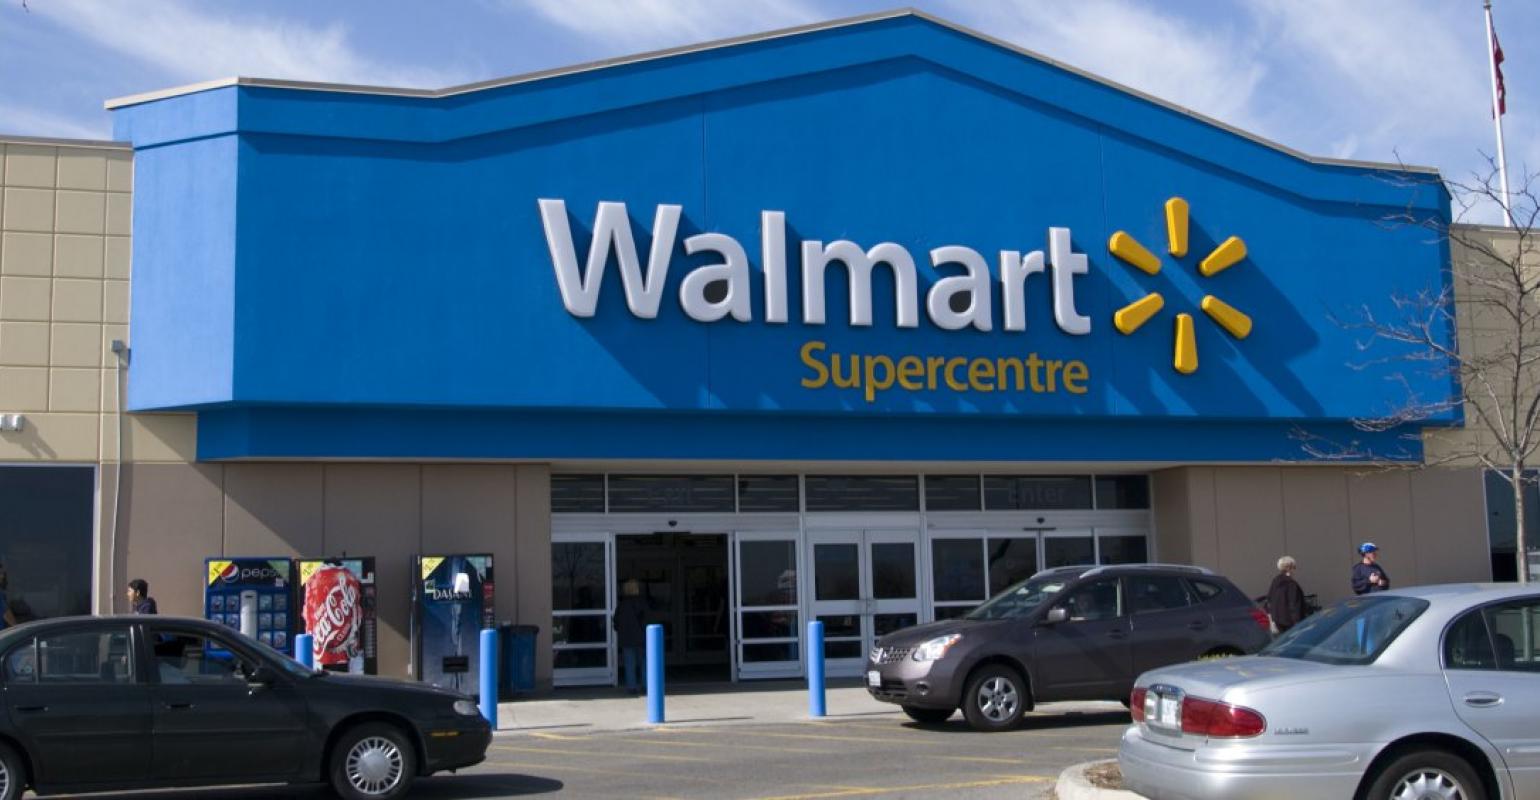 https://www.supermarketnews.com/sites/supermarketnews.com/files/styles/article_featured_retina/public/Walmart_Canada_supercenter_exterior_closeup.jpg?itok=_kLuRAr1